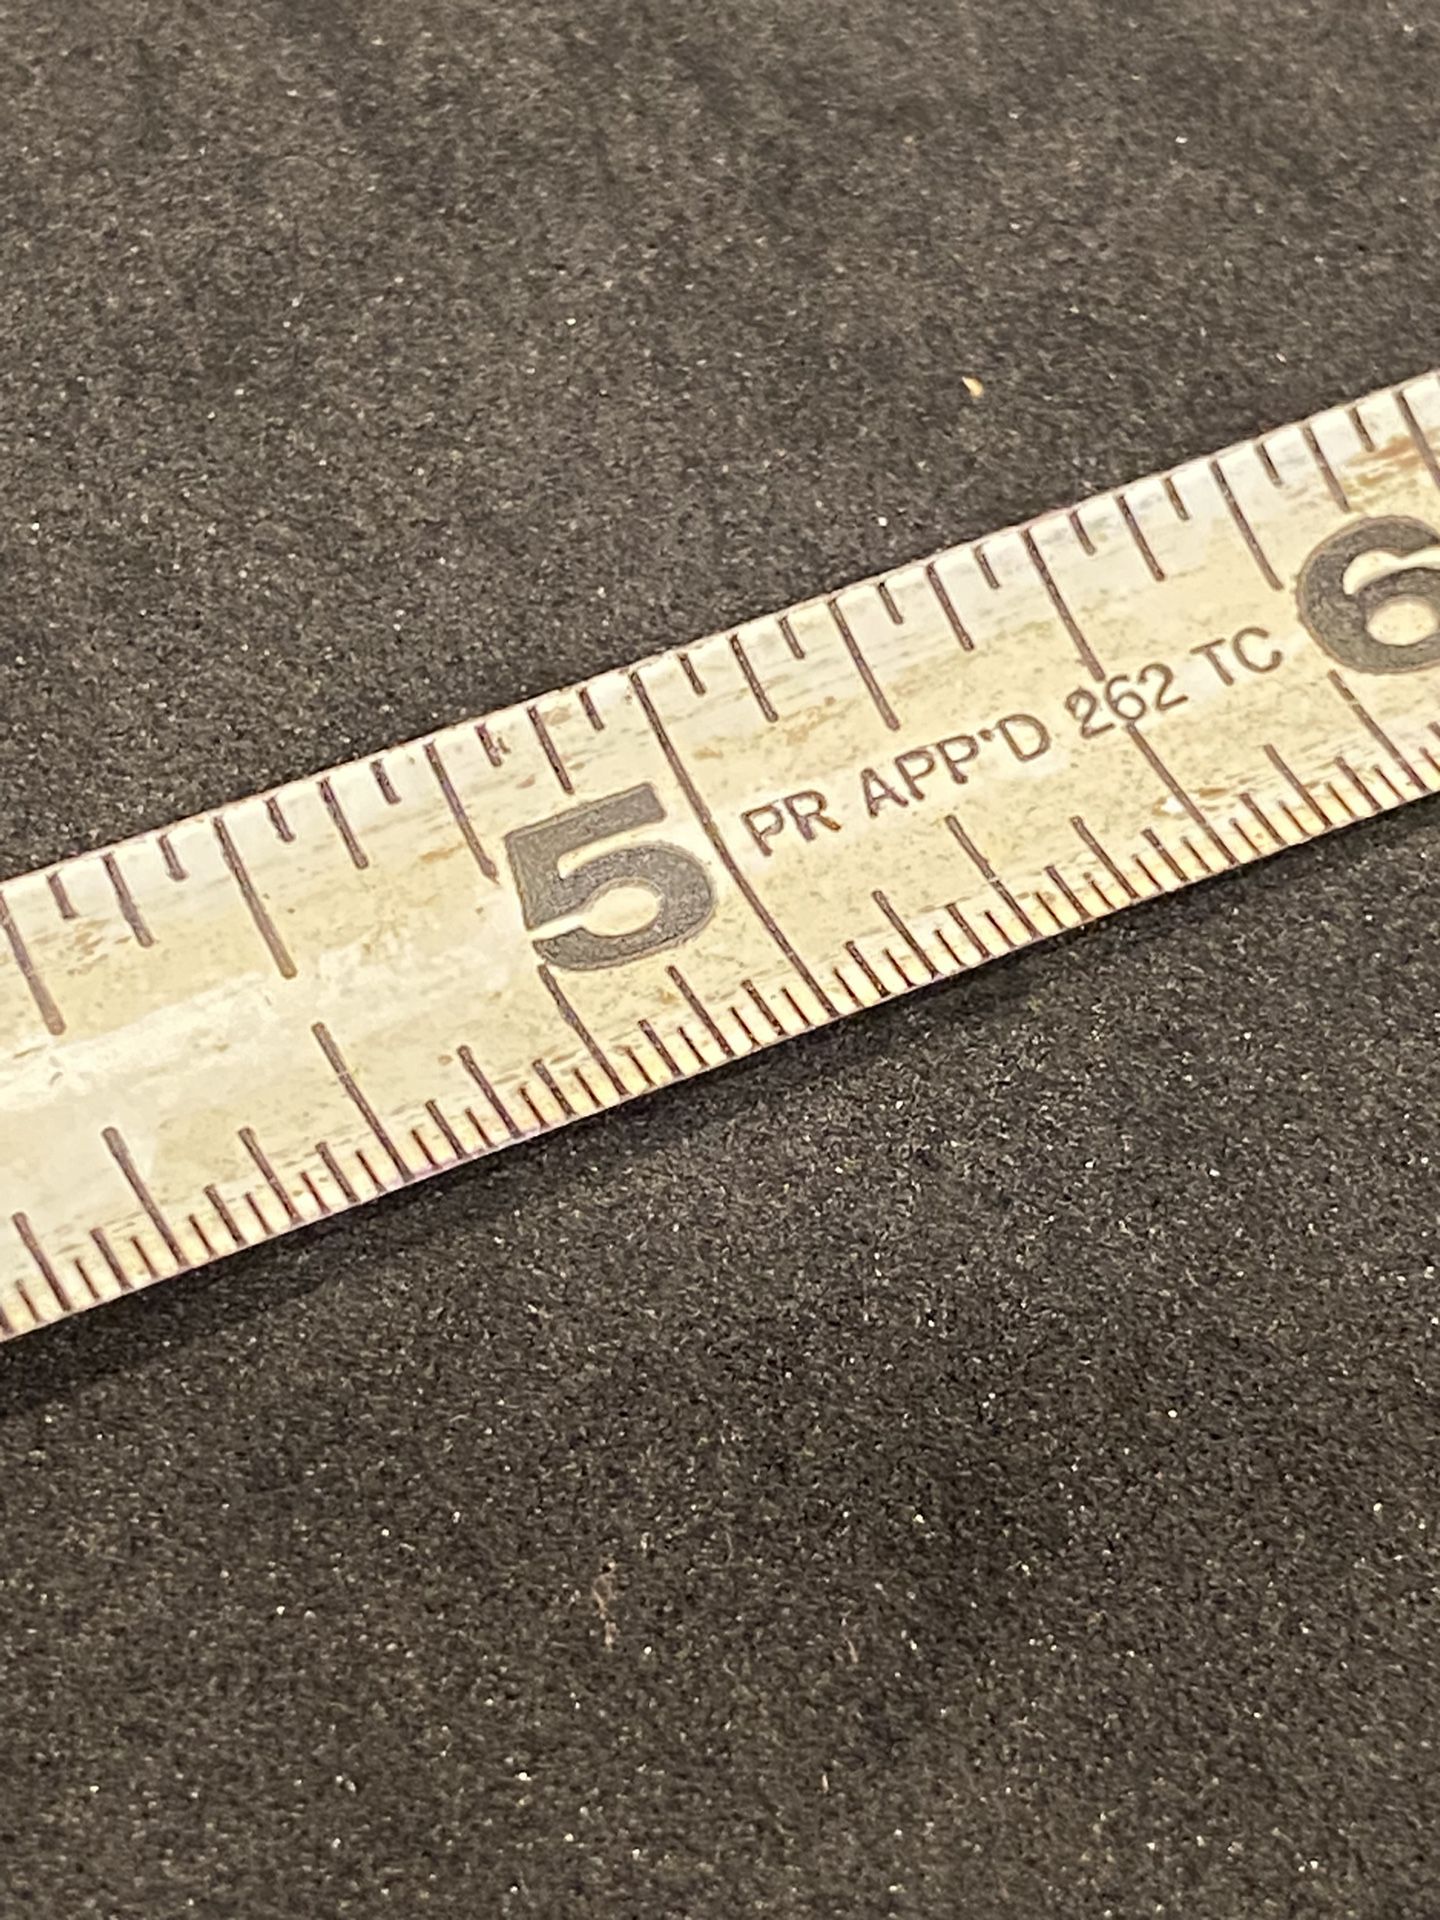 Vintage Sears Craftsman Retractable Tape Measure/ 12FT/ 39223 